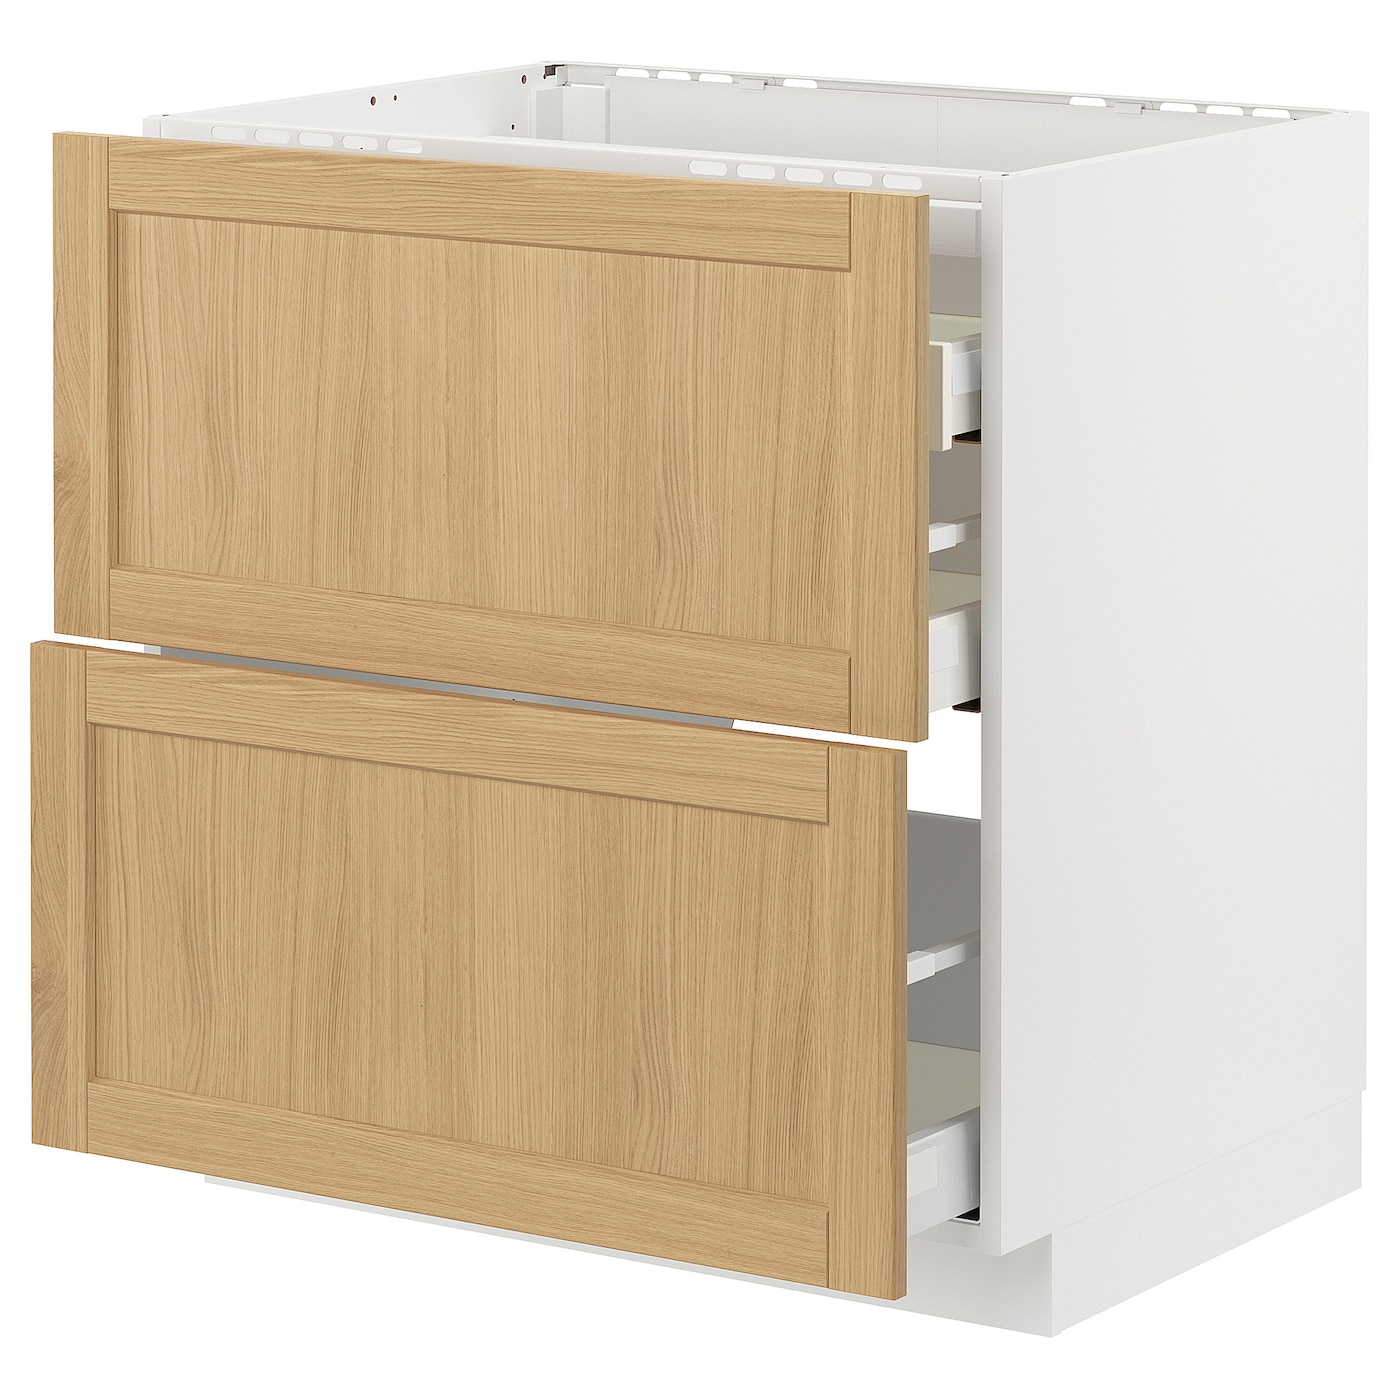 Навесной шкаф - METOD / MAXIMERA IKEA/ МЕТОД/ МАКСИМЕРА ИКЕА,  80х60 см, белый/ под беленый дуб